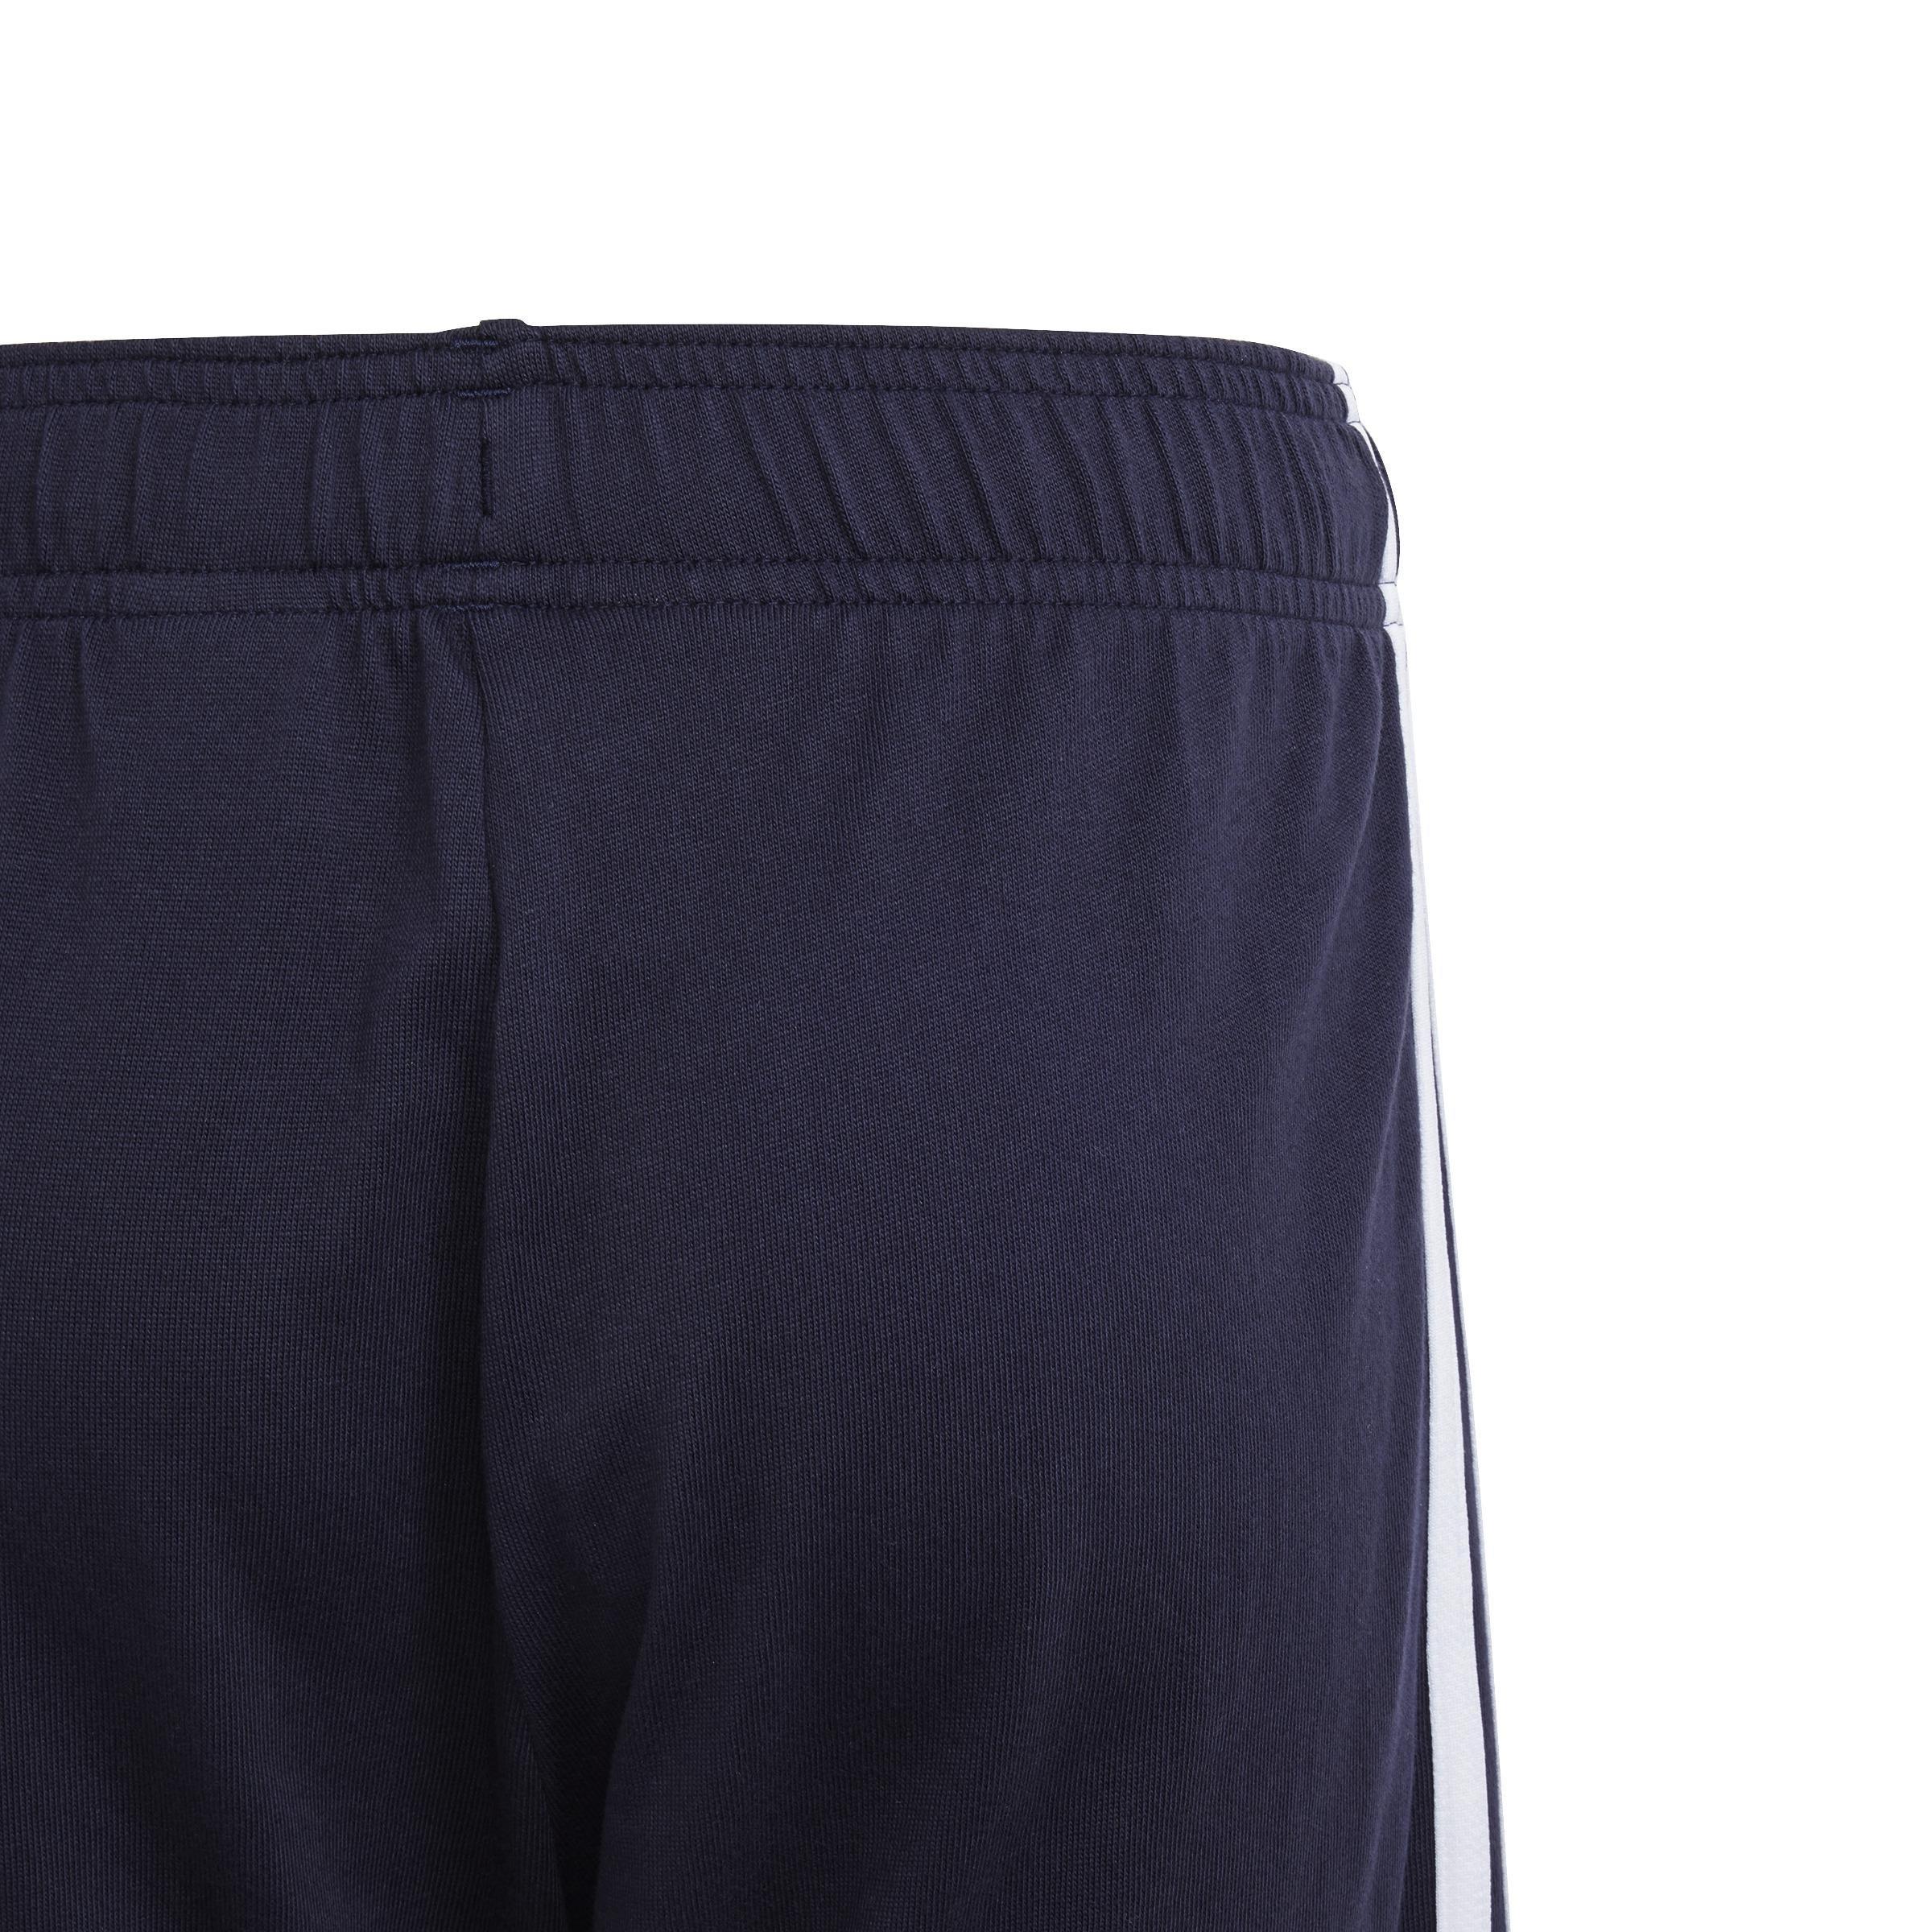 adidas - Kids Unisex Essentials 3-Stripes Knit Shorts, Blue